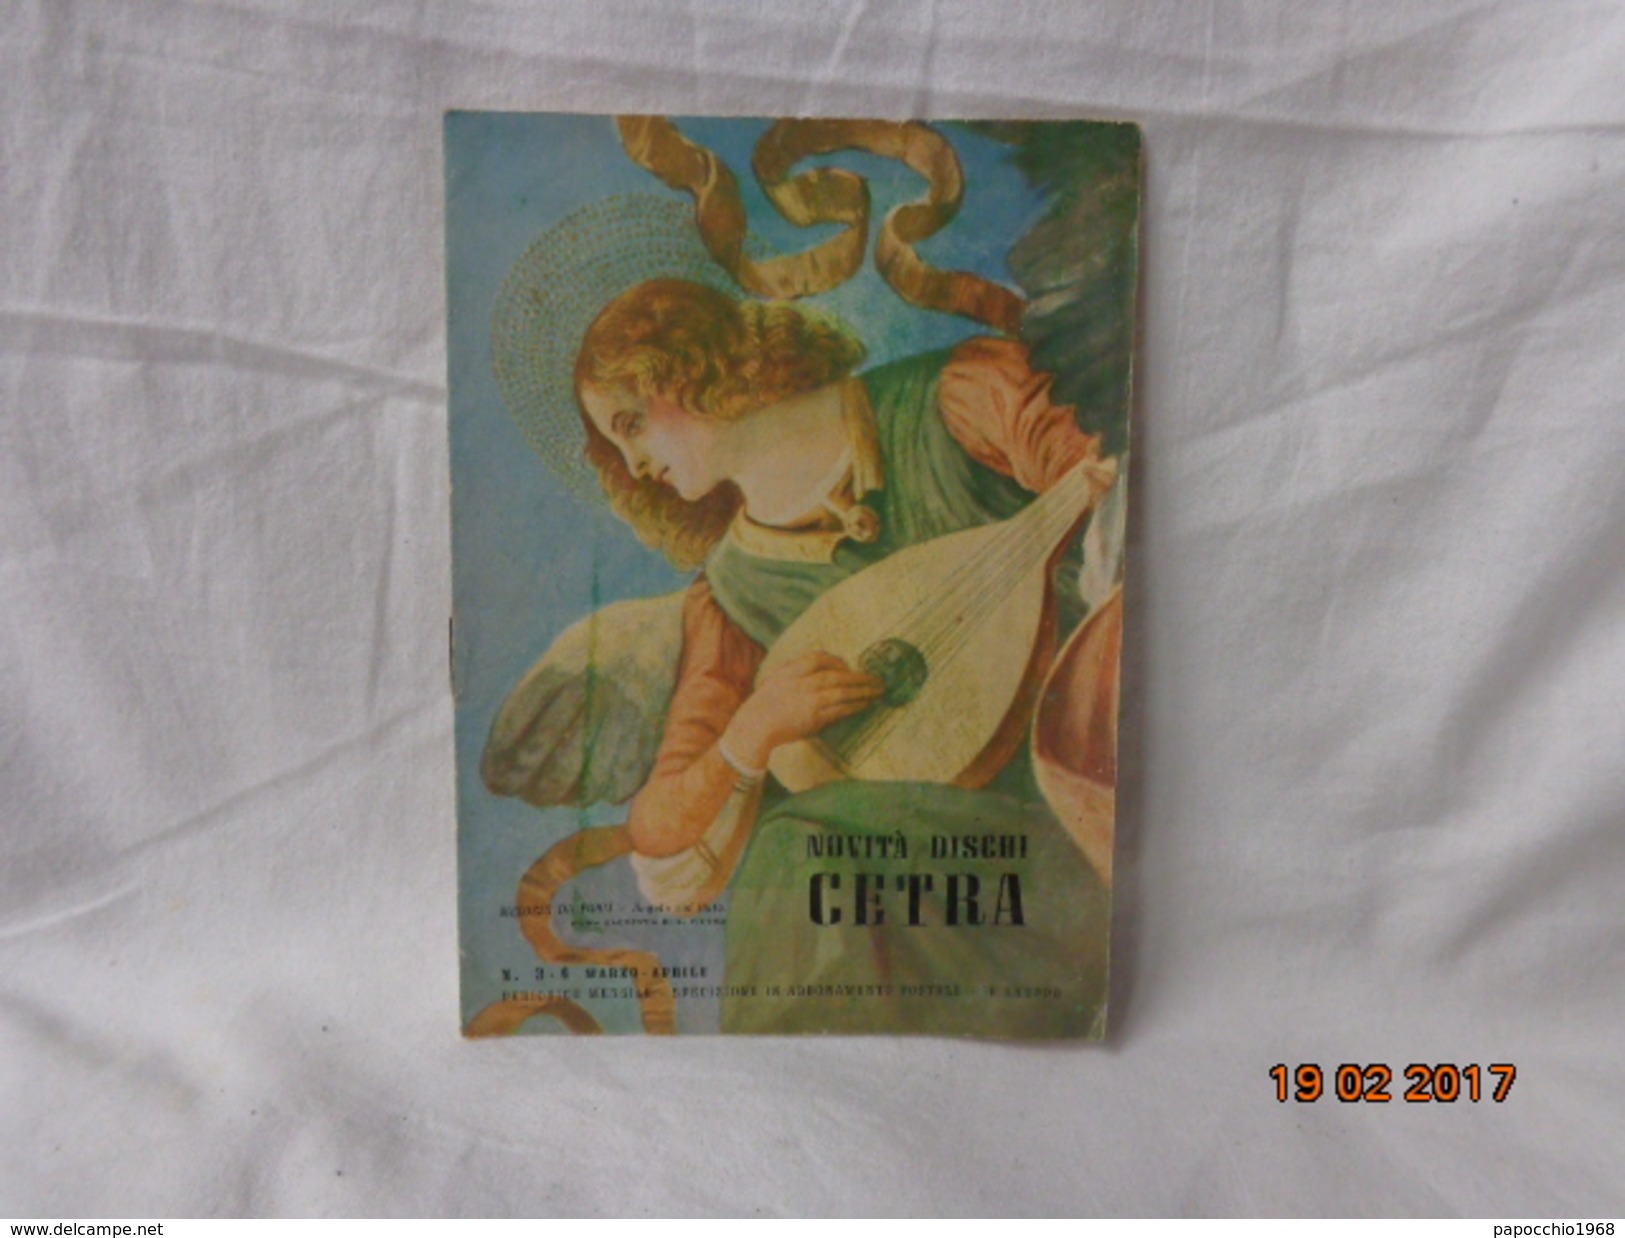 CATALOGO NOVITA' DISCHI CETRA EPOCA 1950 - Complete Collections